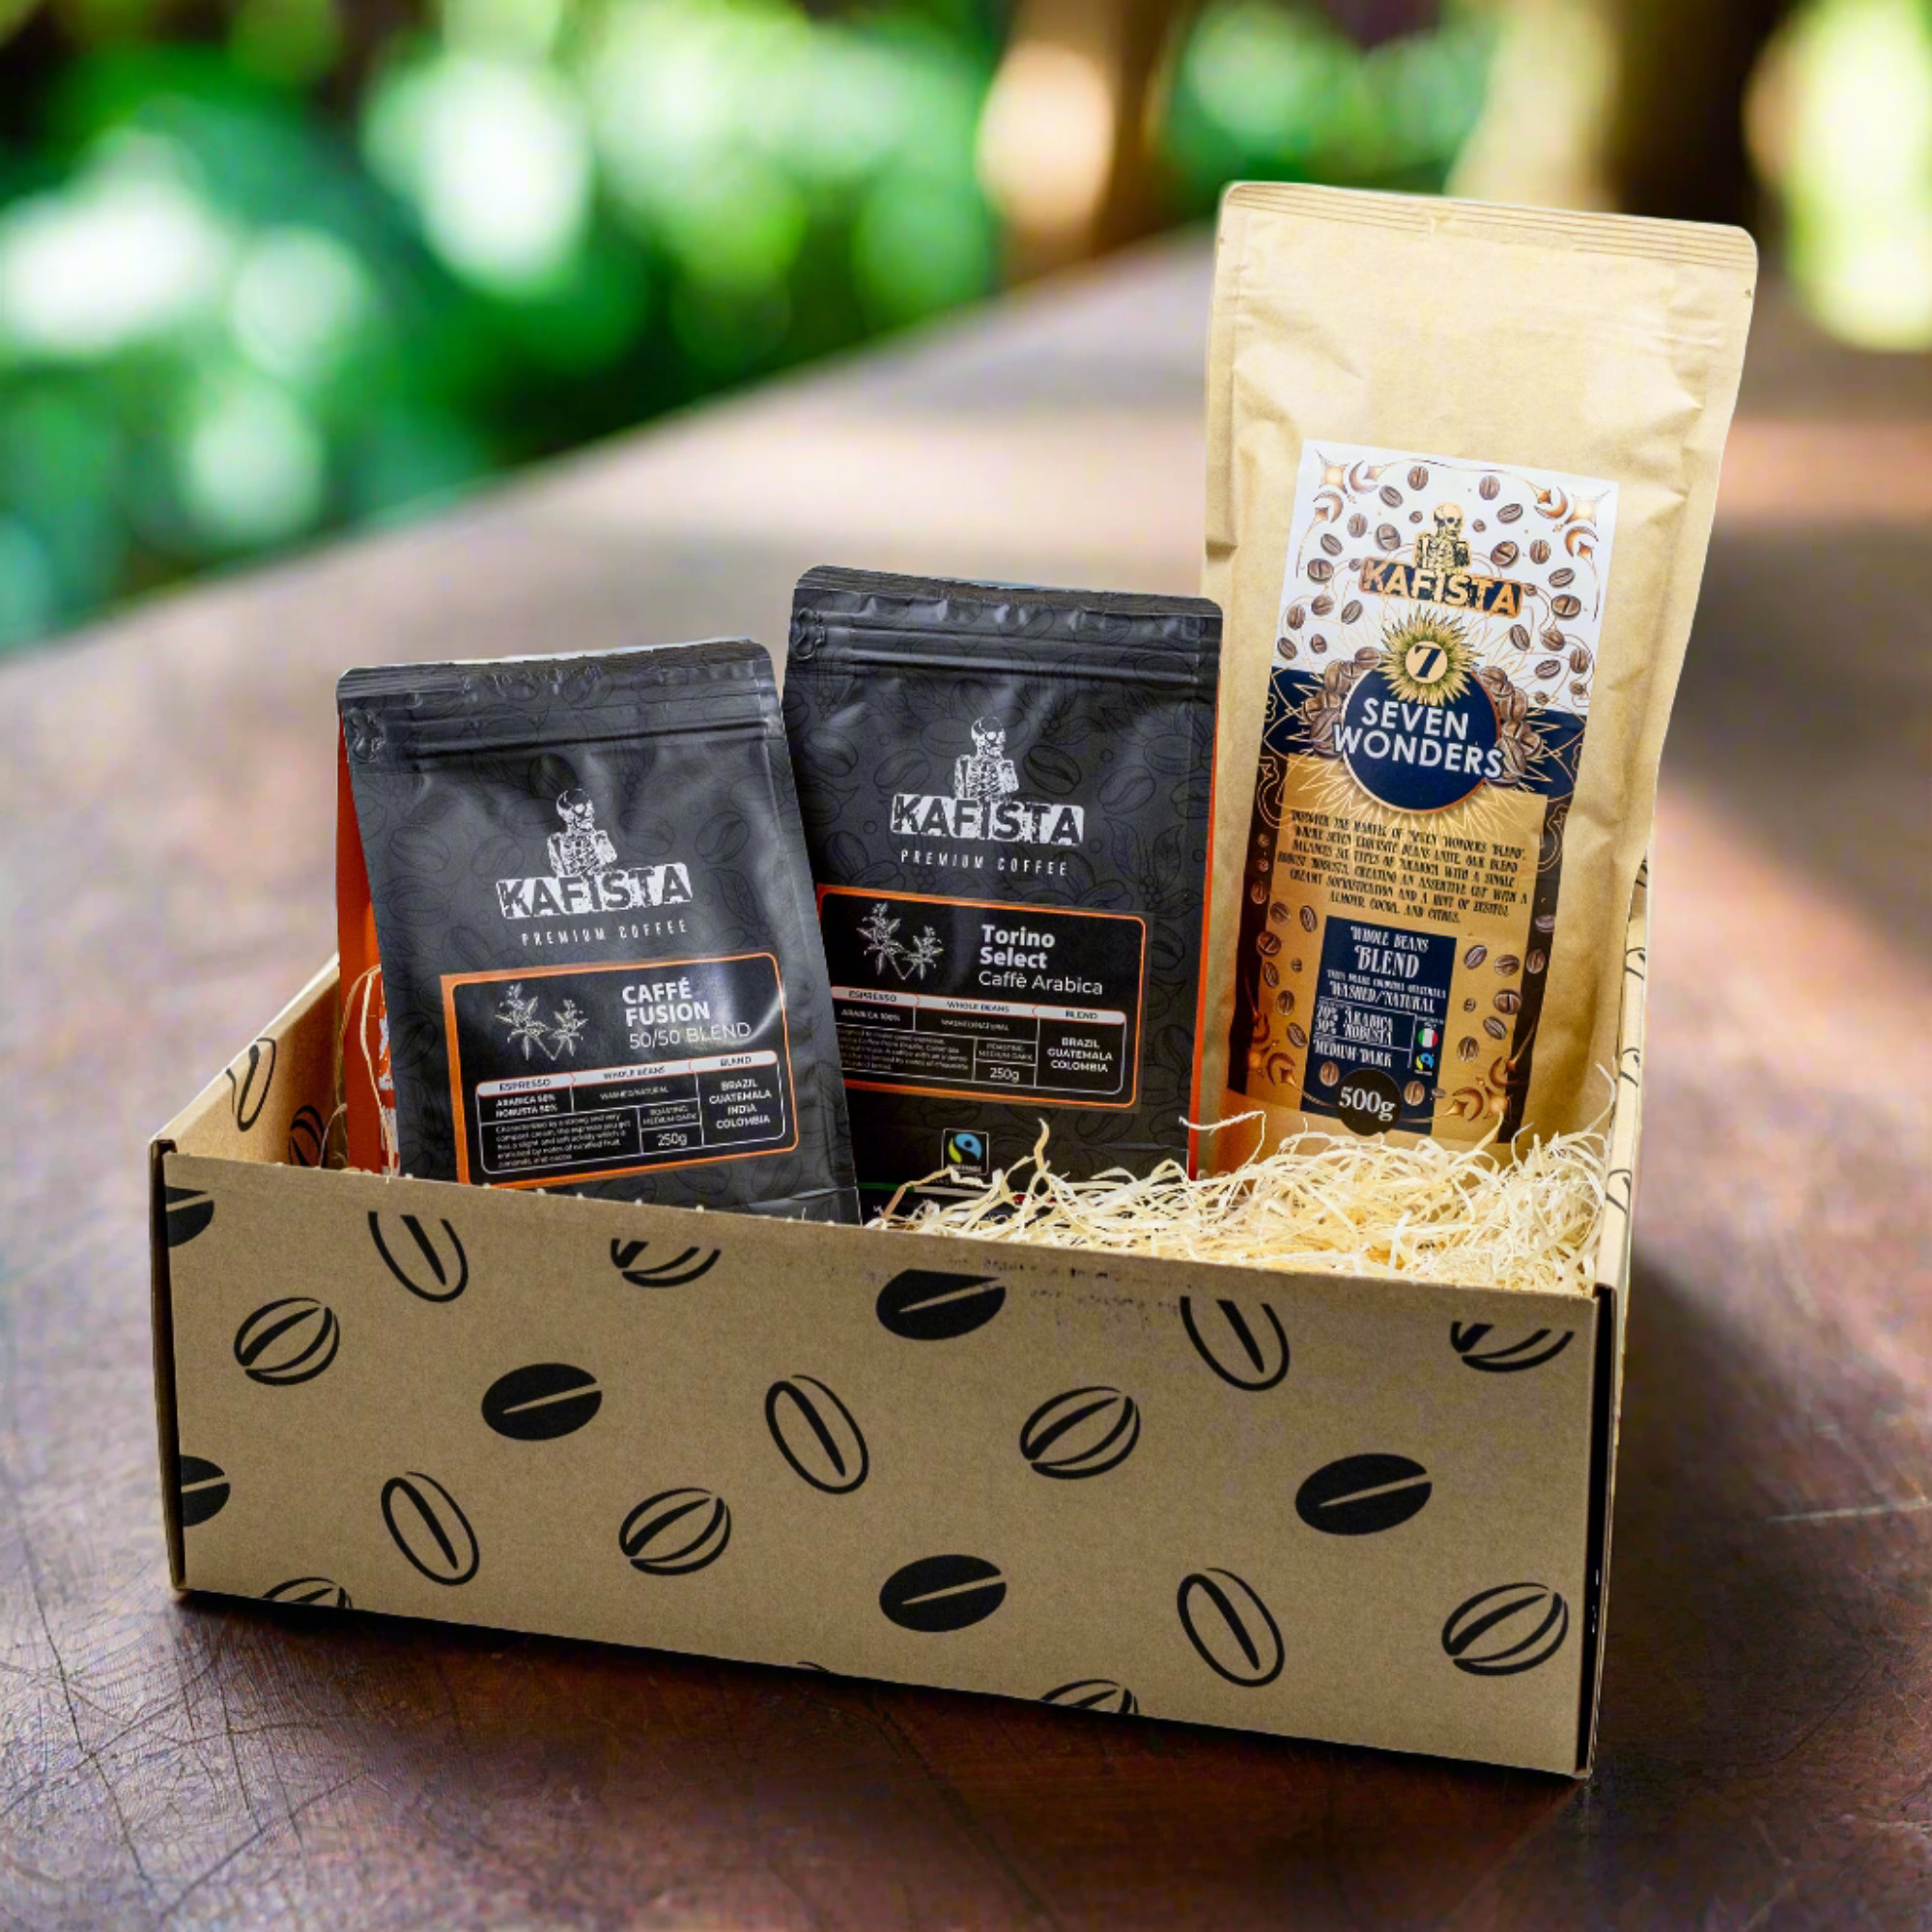 Coffee Box 4 - Dárkový balíček s kávou Kafista - zrnková káva pražená v Itálii